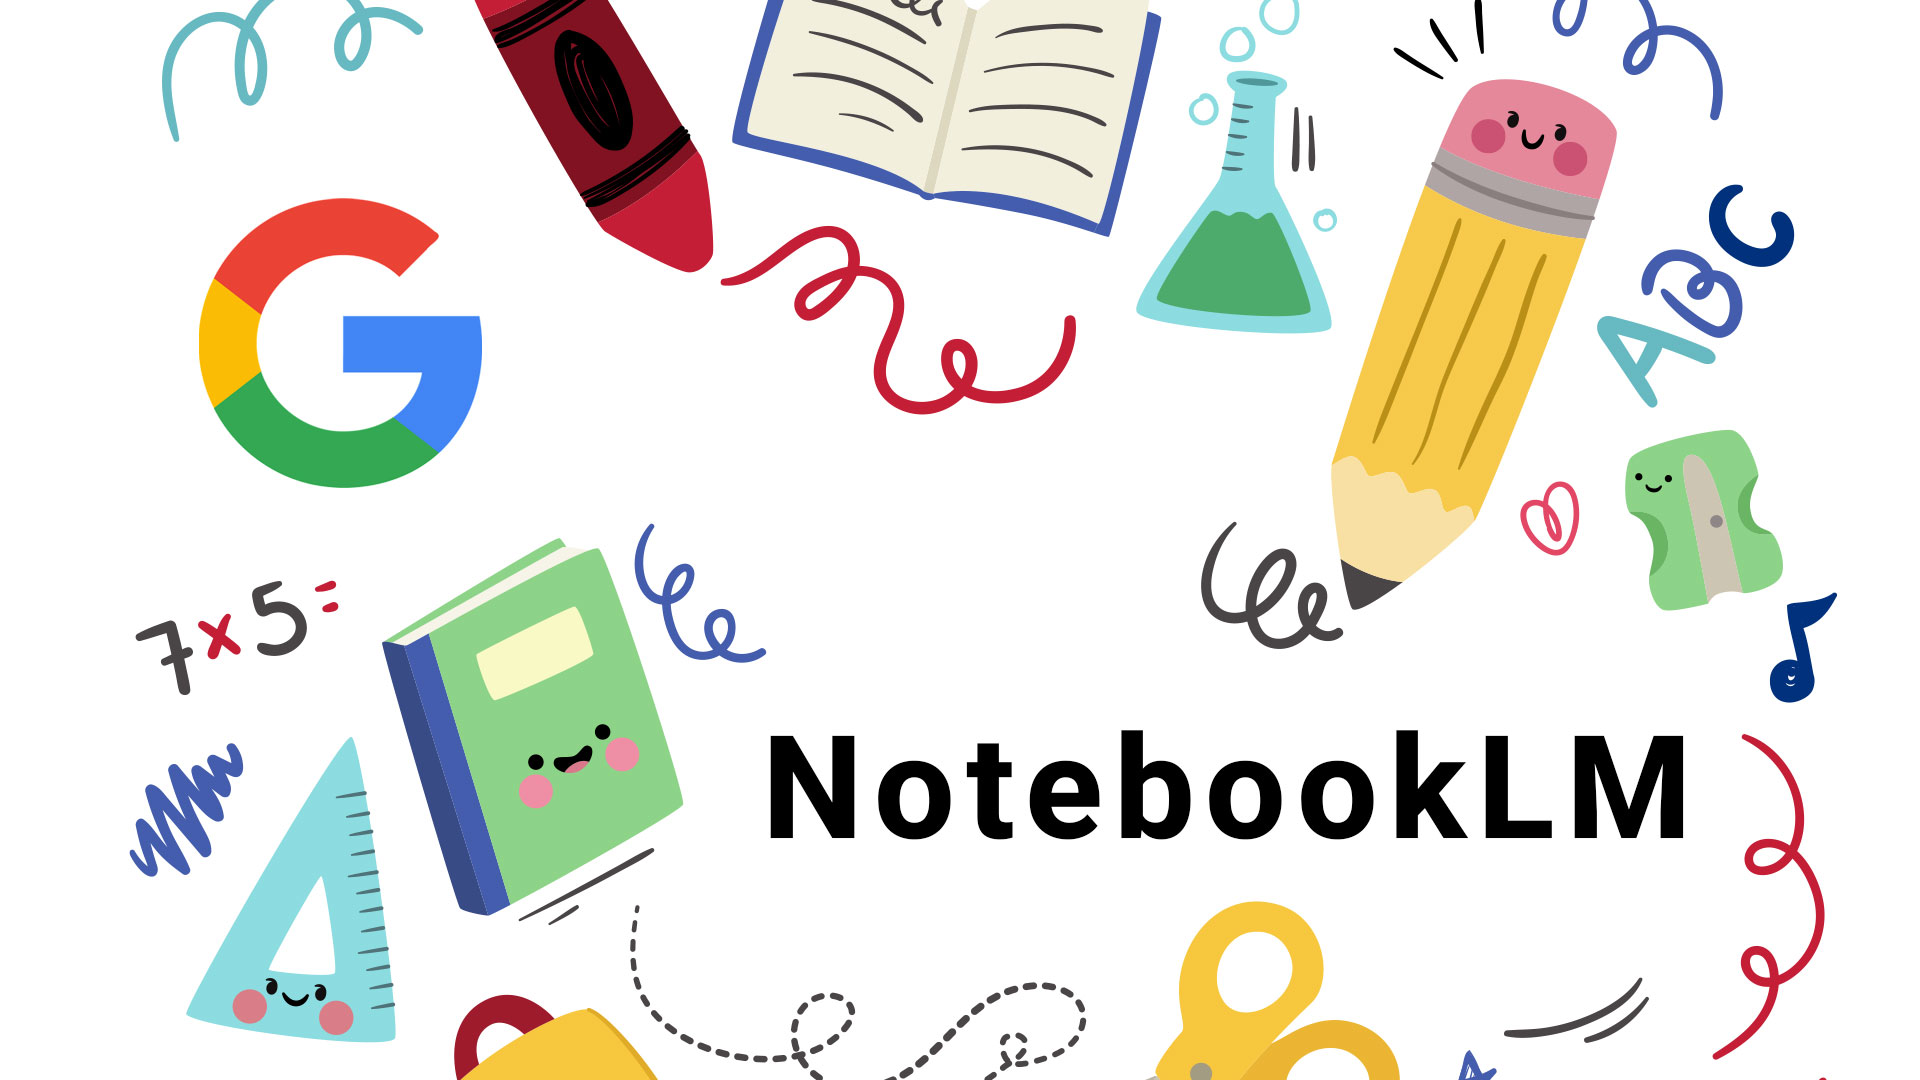 NotebookLM app